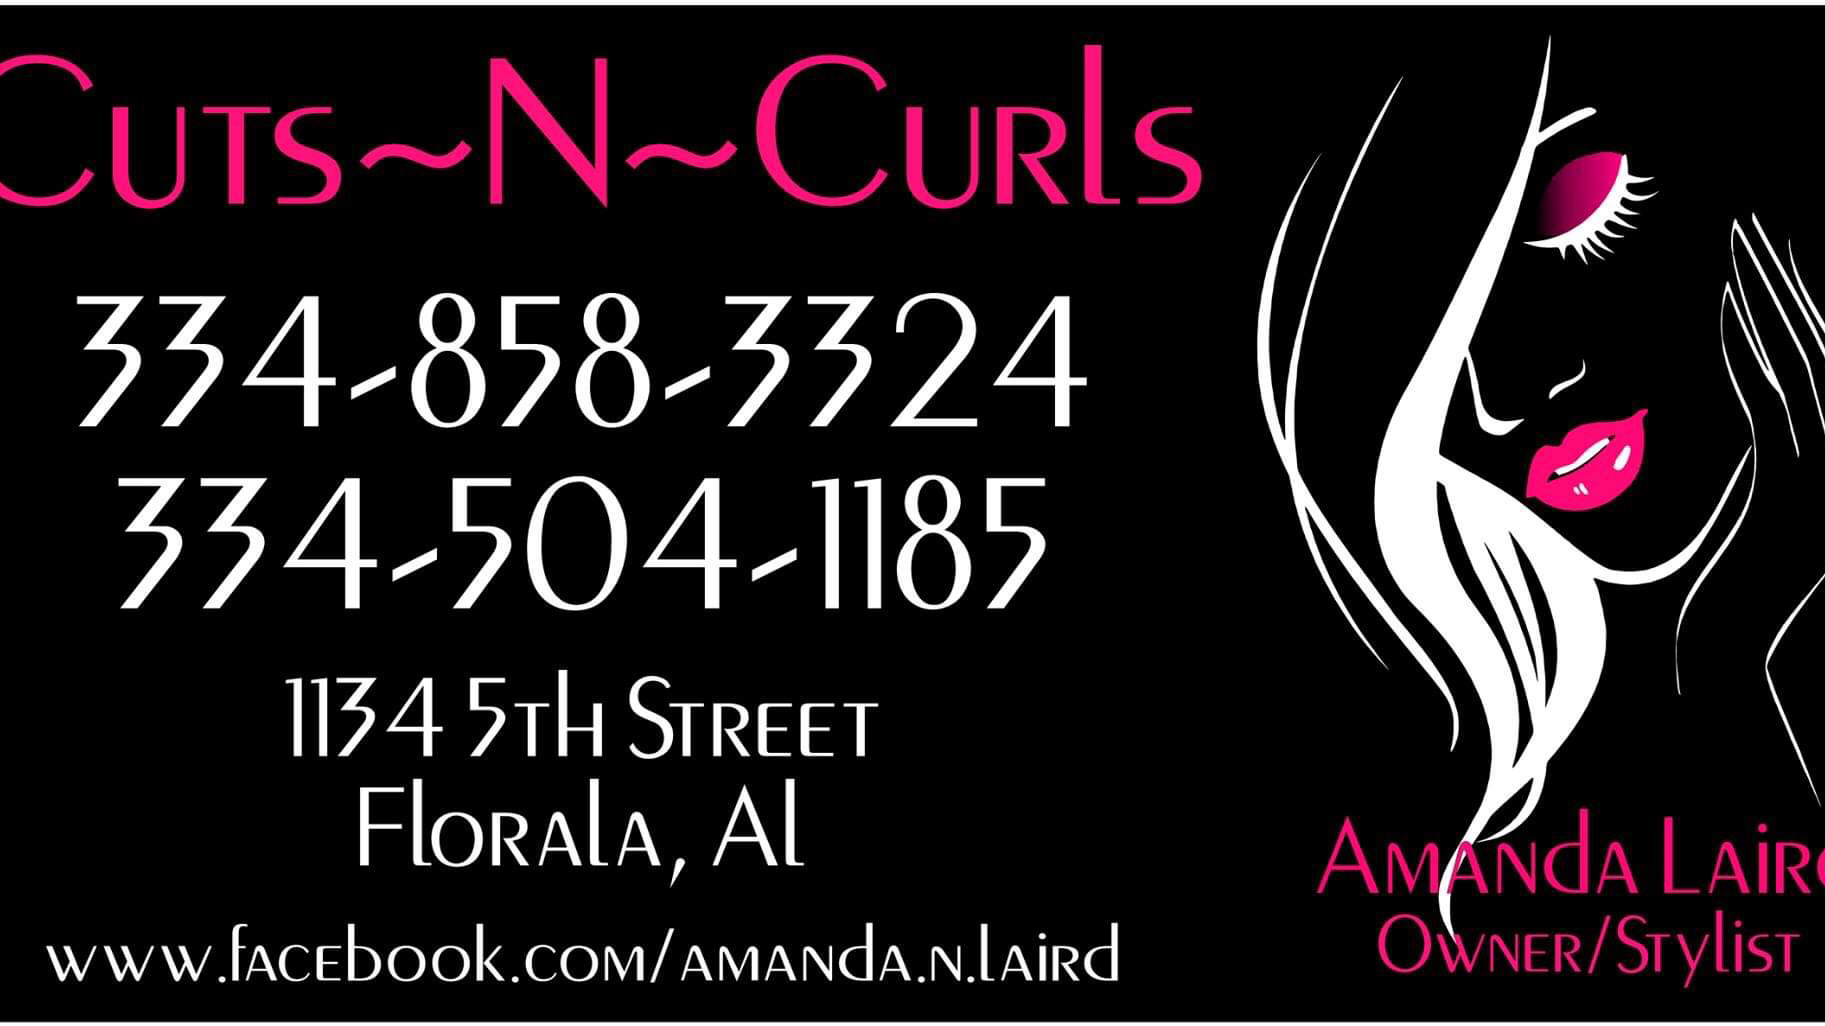 Cut's N Curl's Beauty Salon 1134 5th St, Florala Alabama 36442